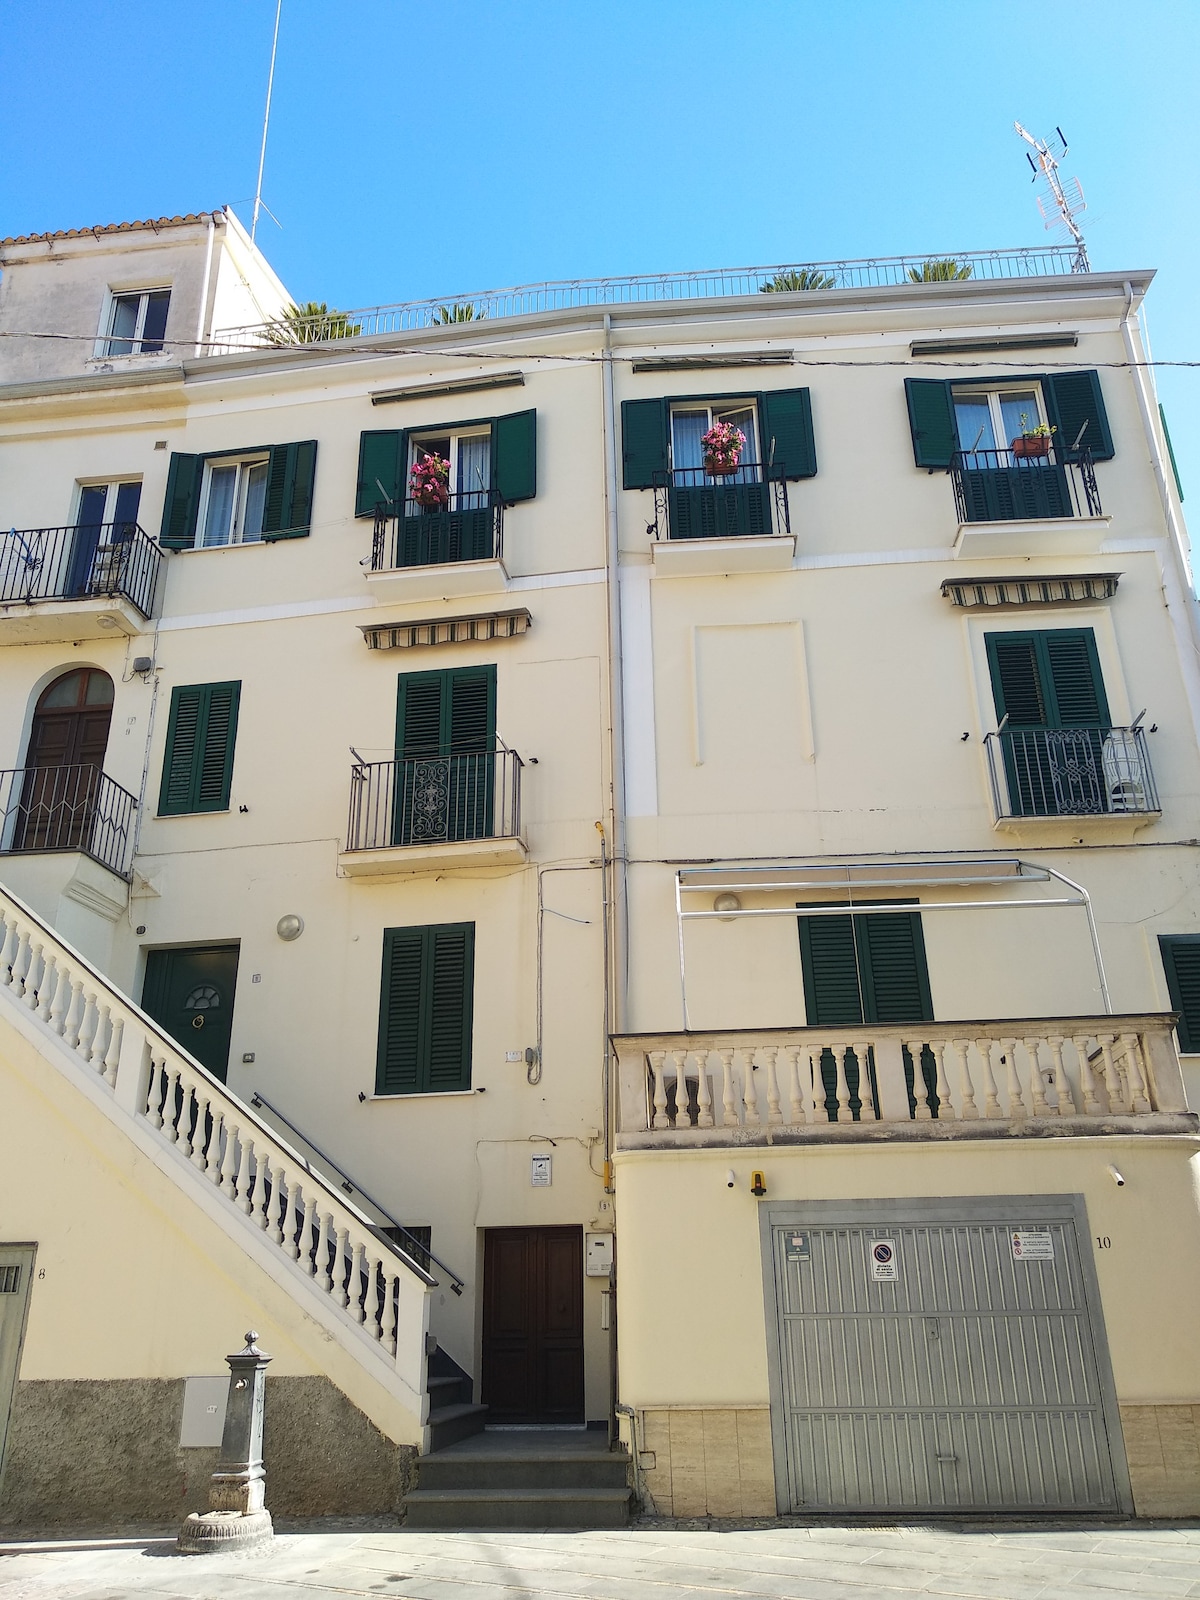 Casa San Biagio